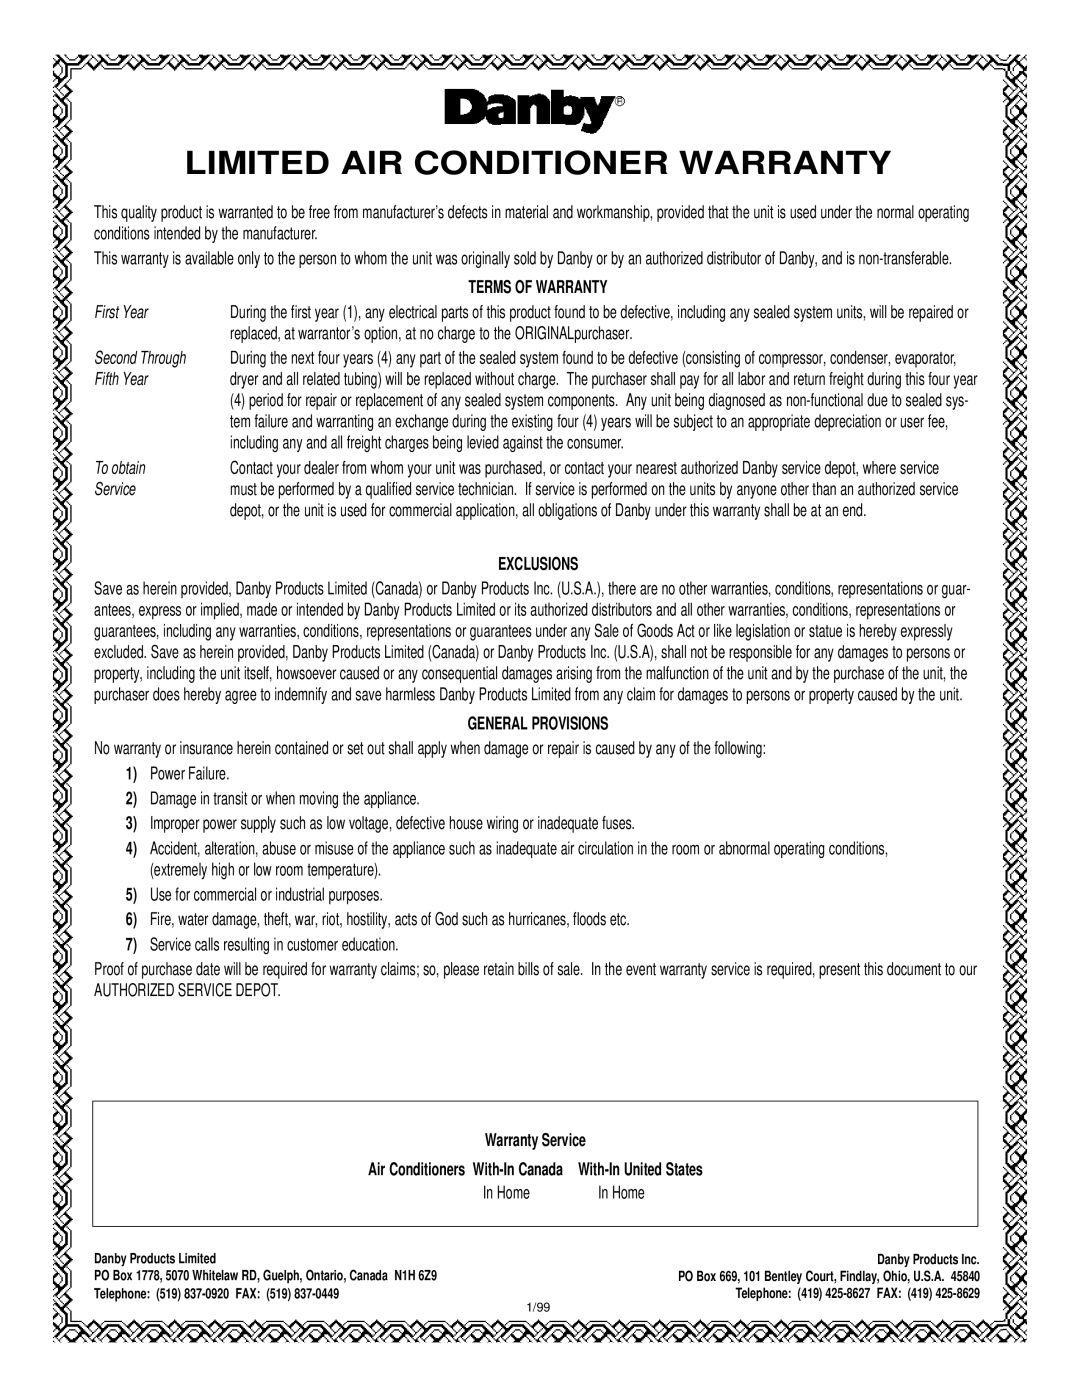 Danby DAC8404DE Limited Air Conditioner Warranty, Terms Of Warranty, Exclusions, General Provisions, Warranty Service 